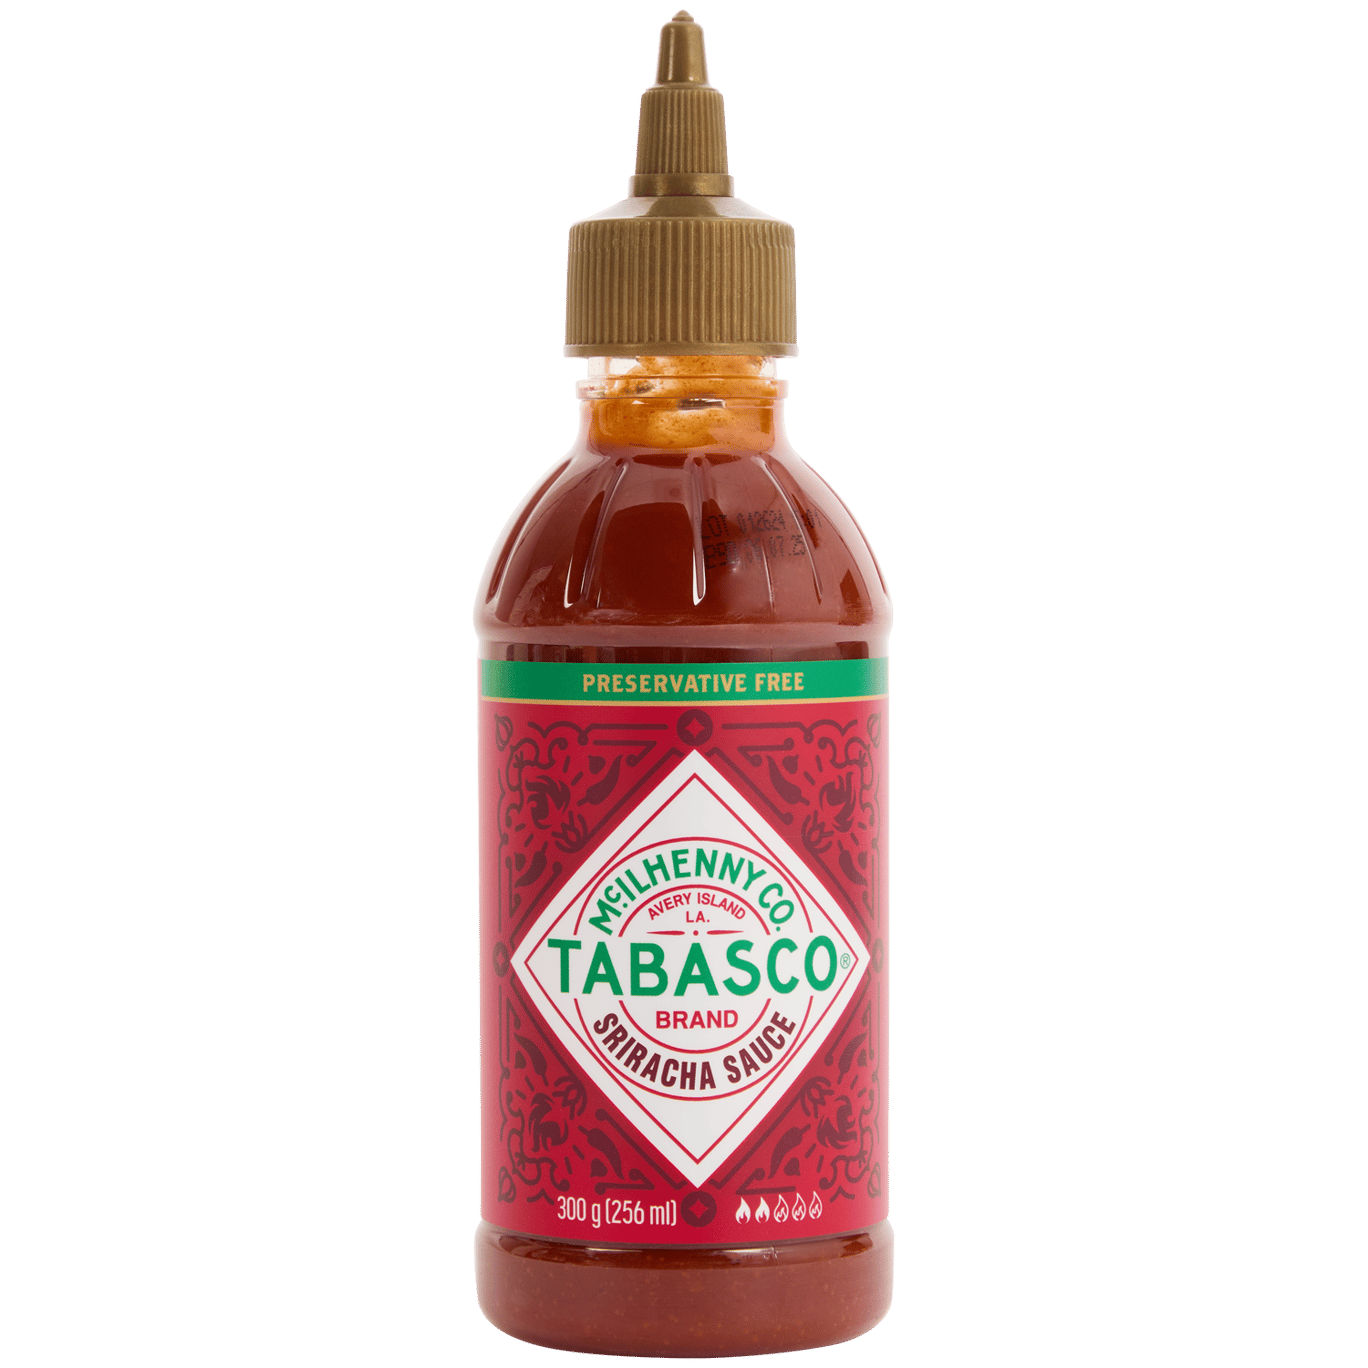 McIlhenny Co. tabasco Sriracha